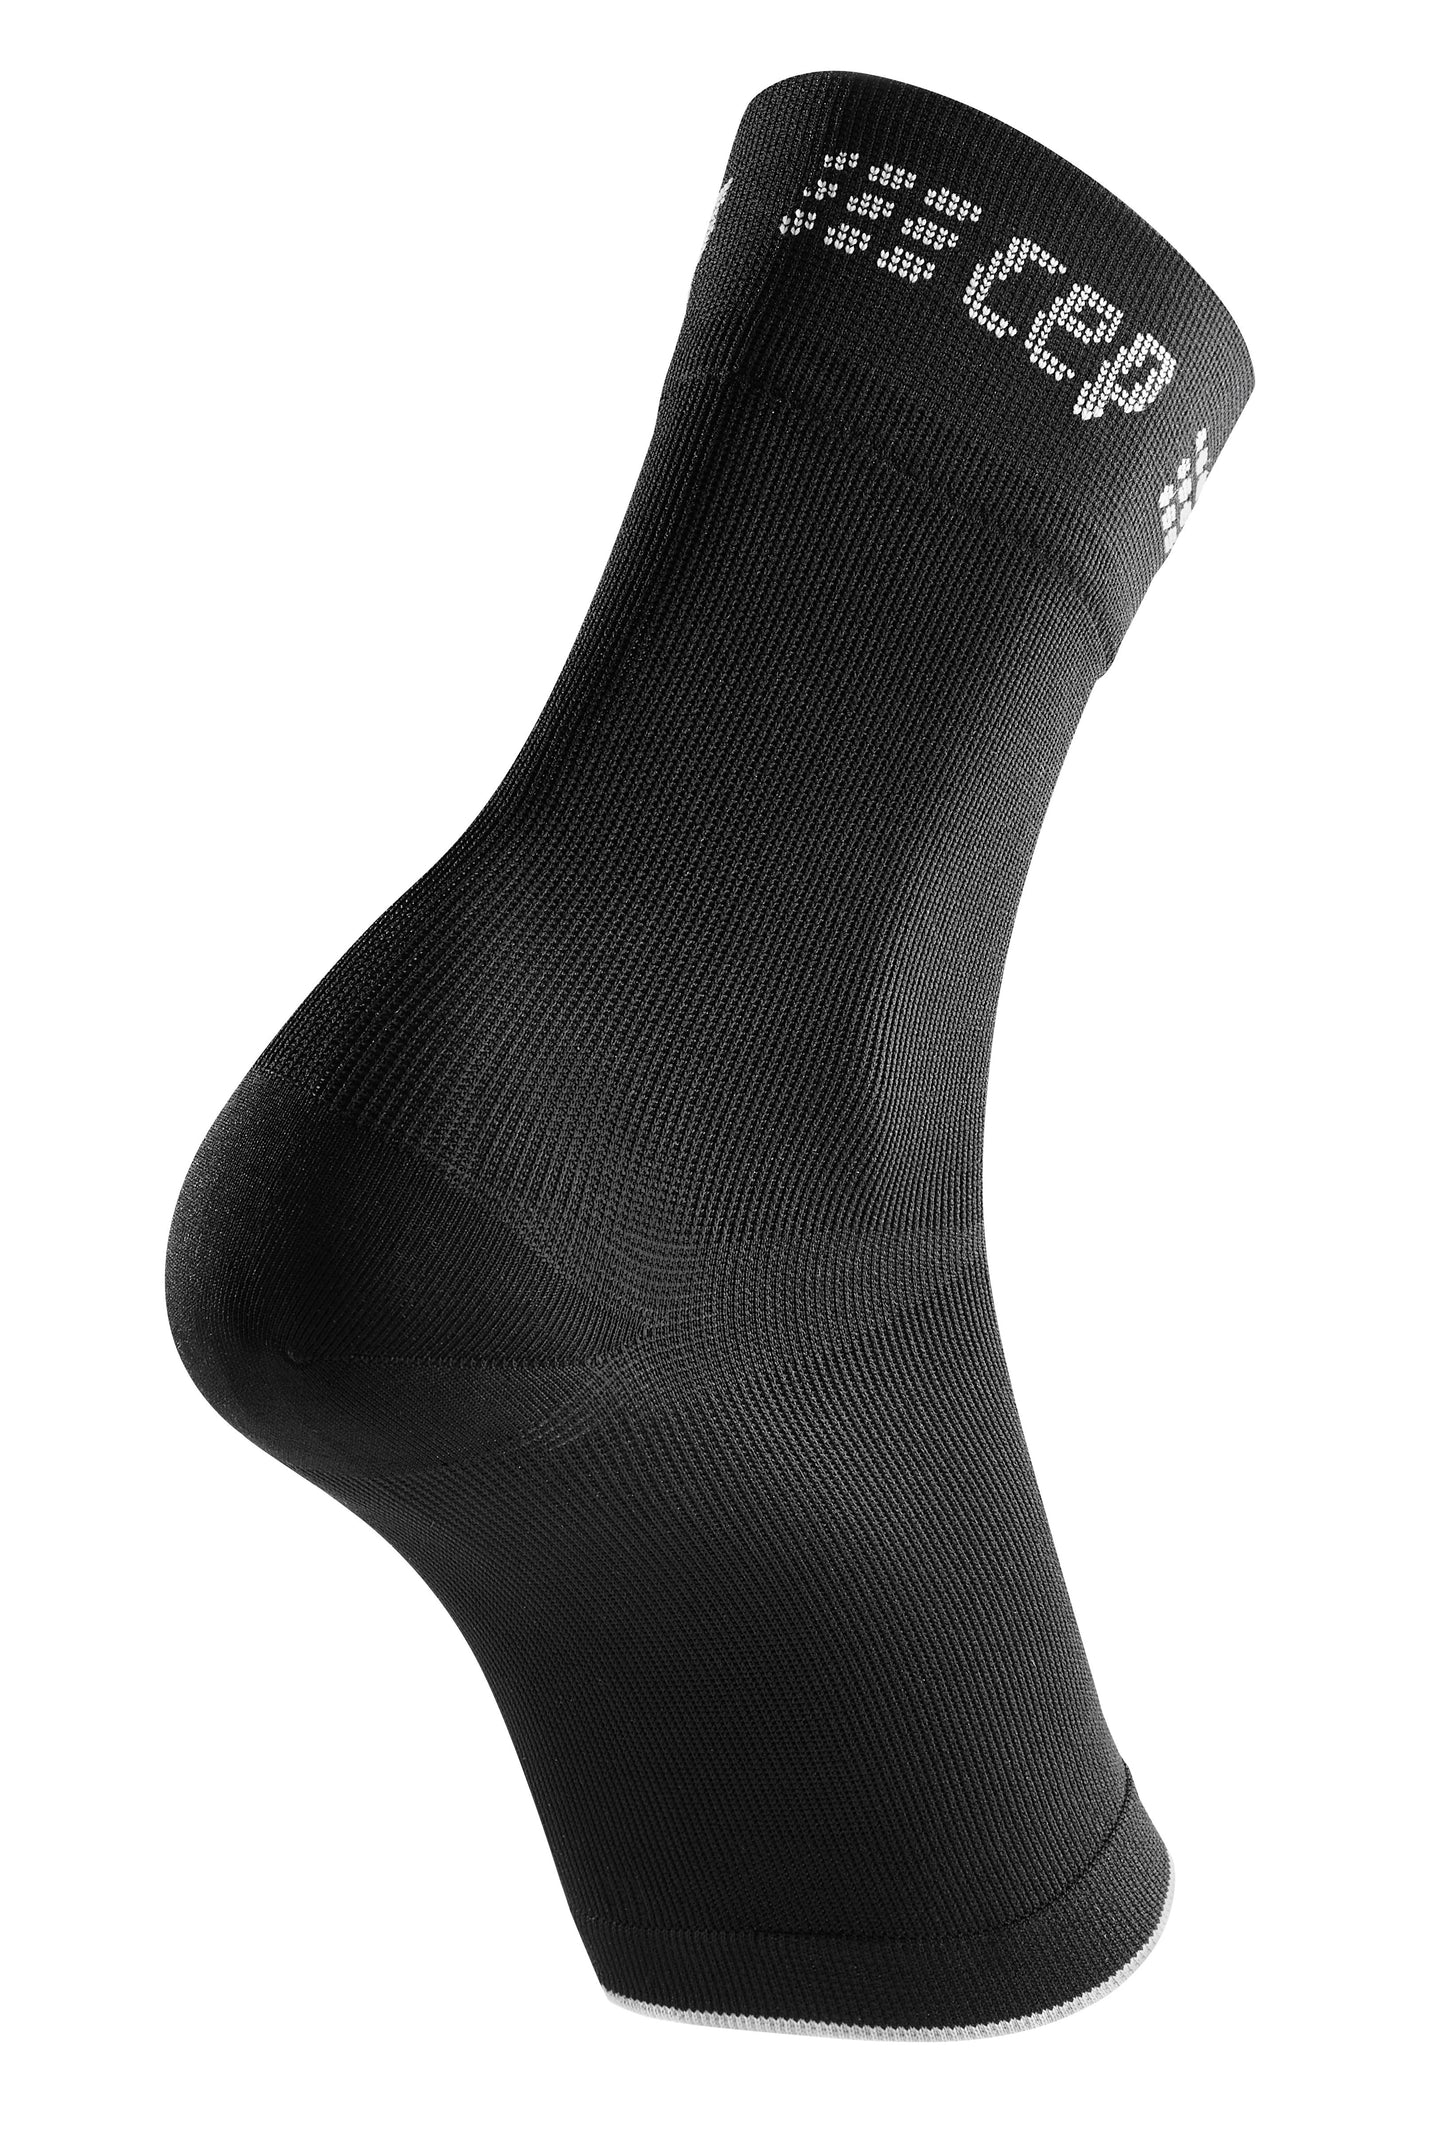 CEP Ortho Ankle Sleeve Unisex - BLACK/GREY